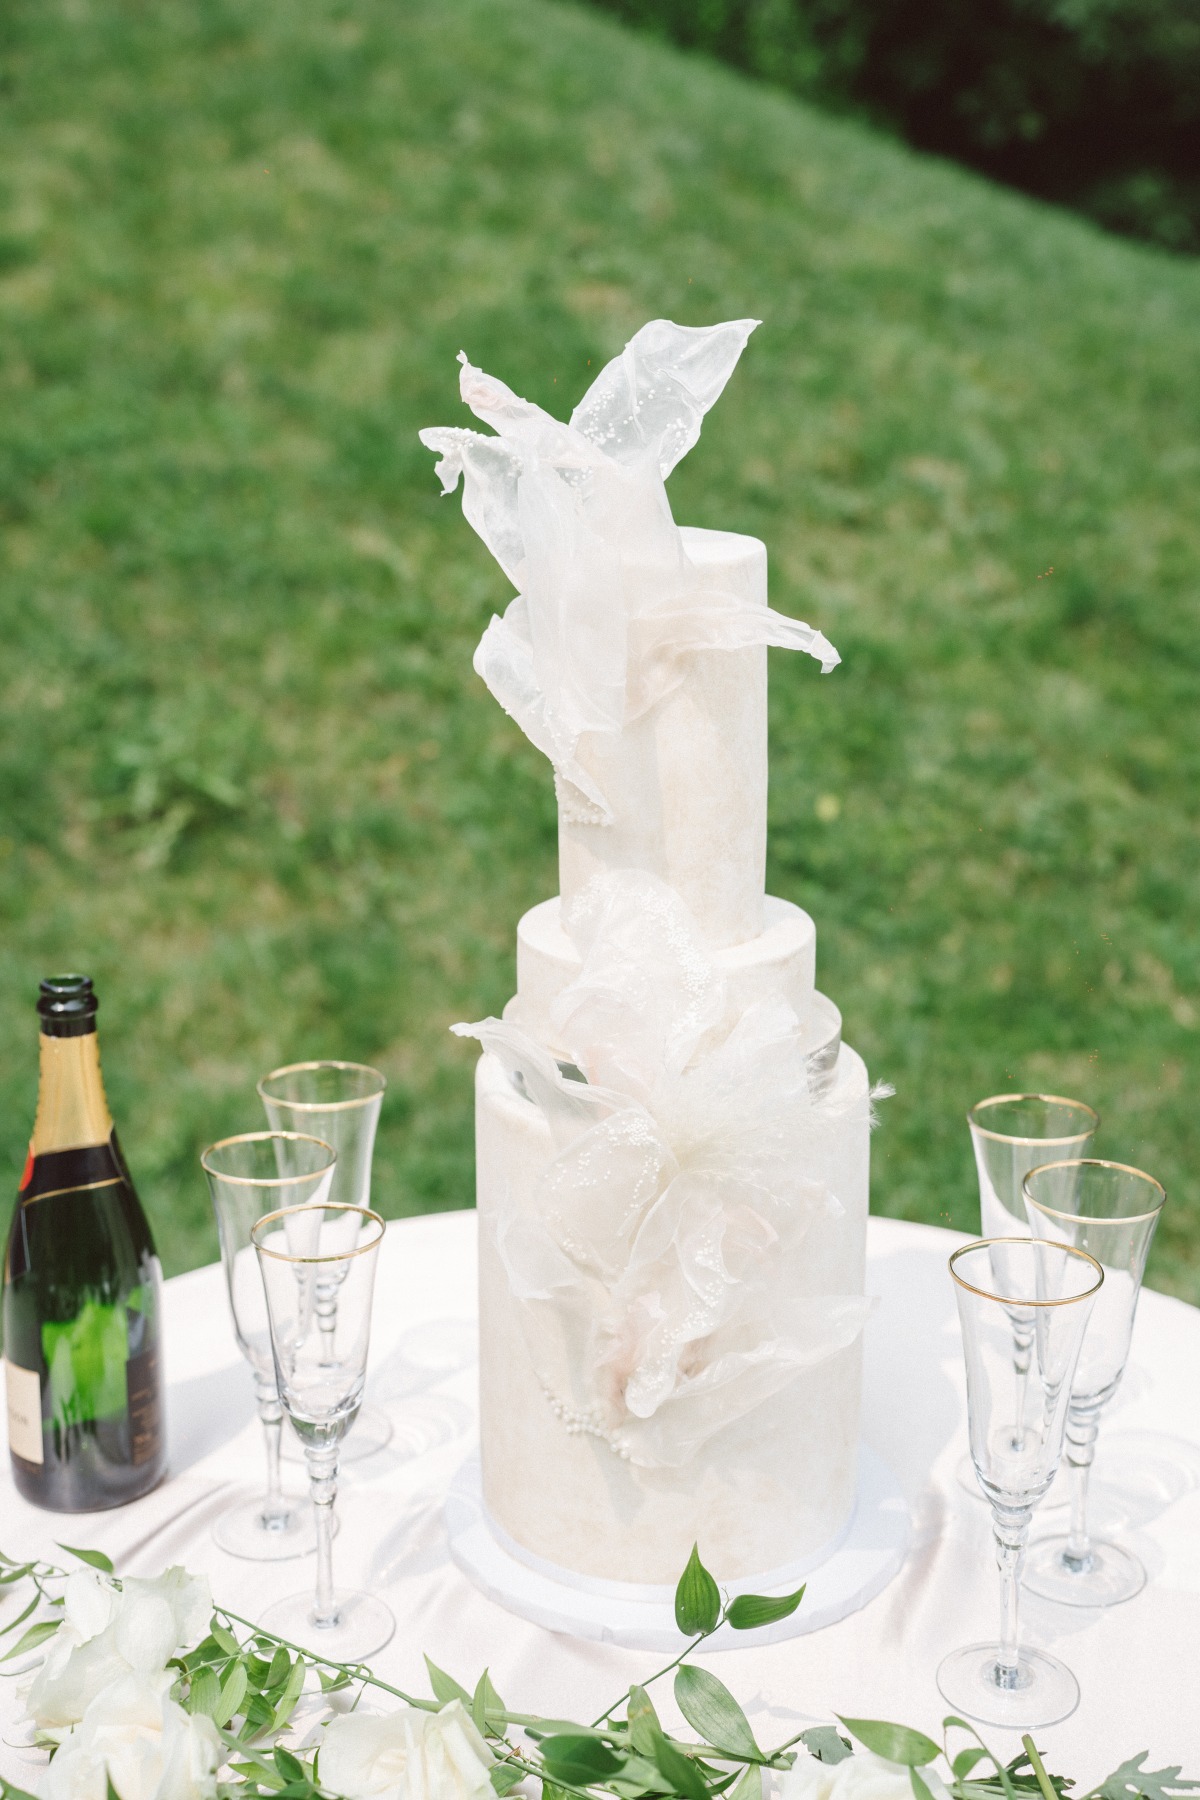 Whimsical wedding cake design 